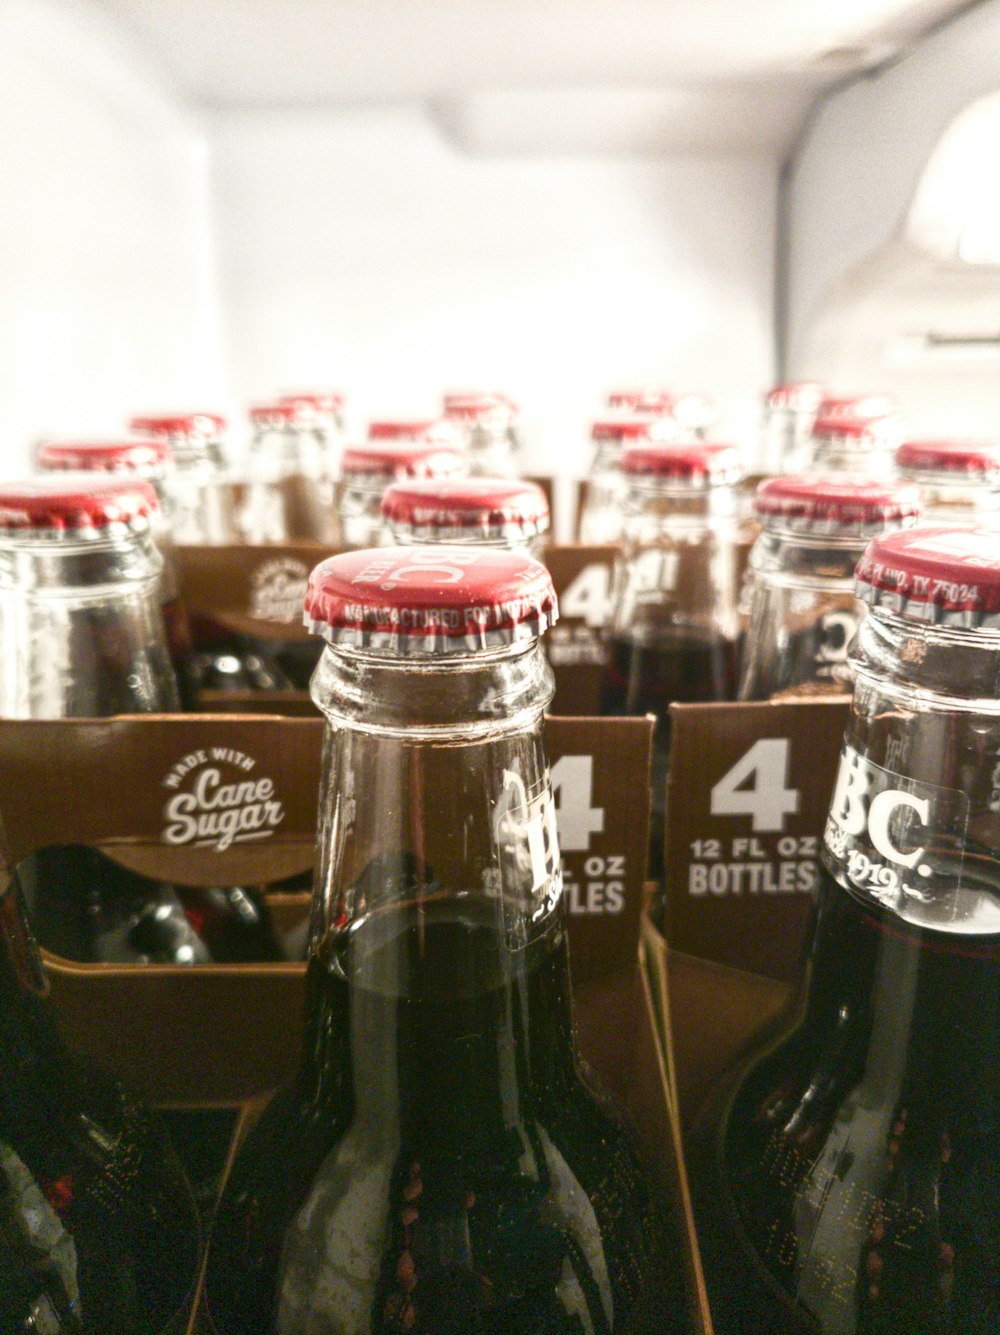 coca cola bottles on shelf